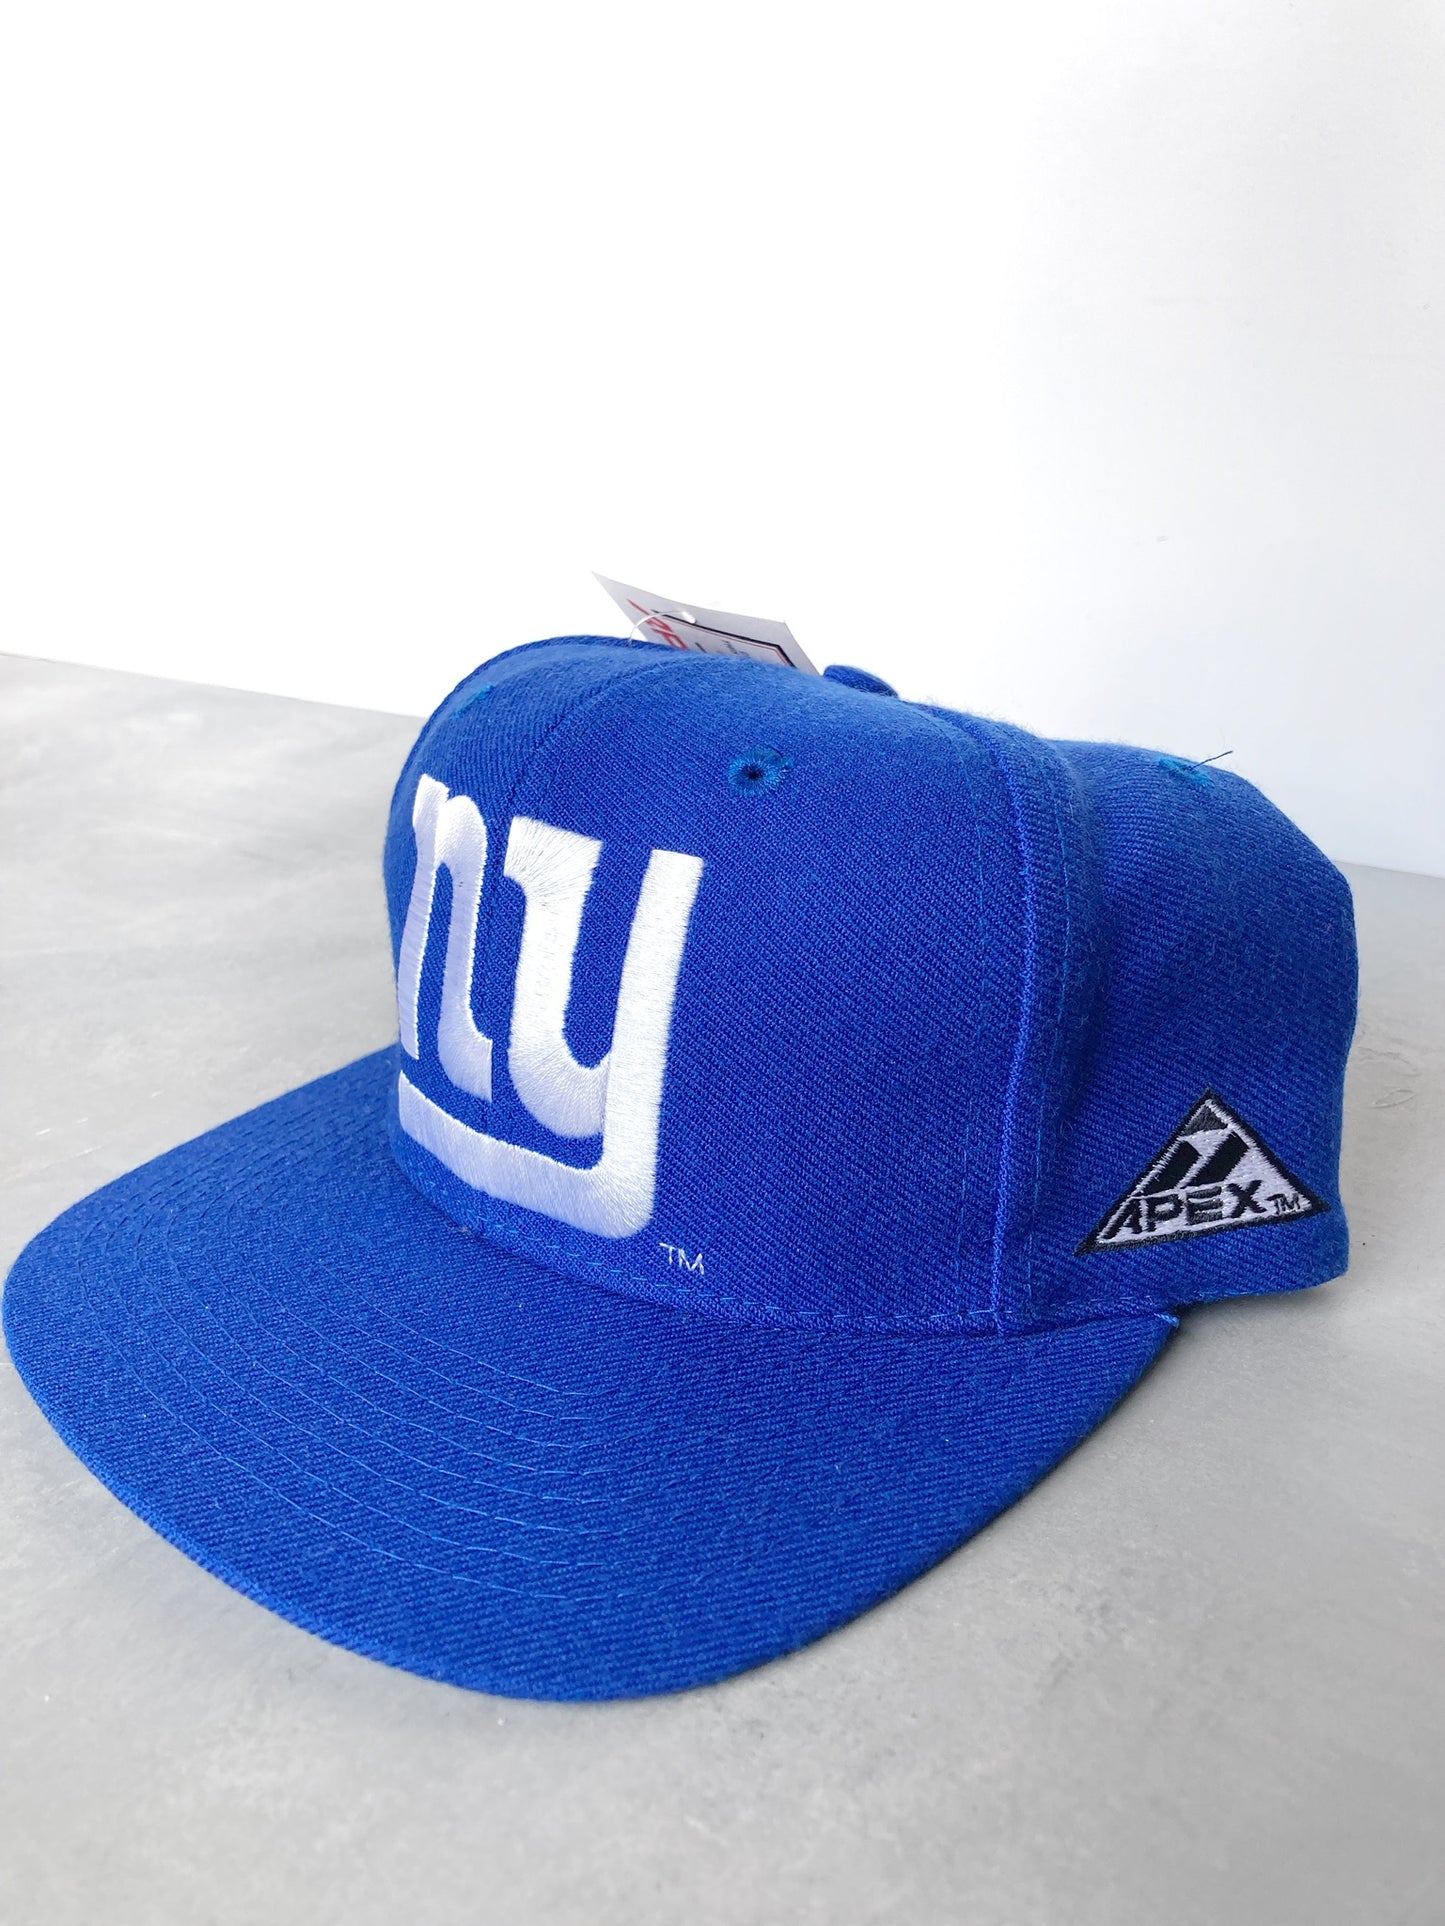 New York Giants Hat 90's